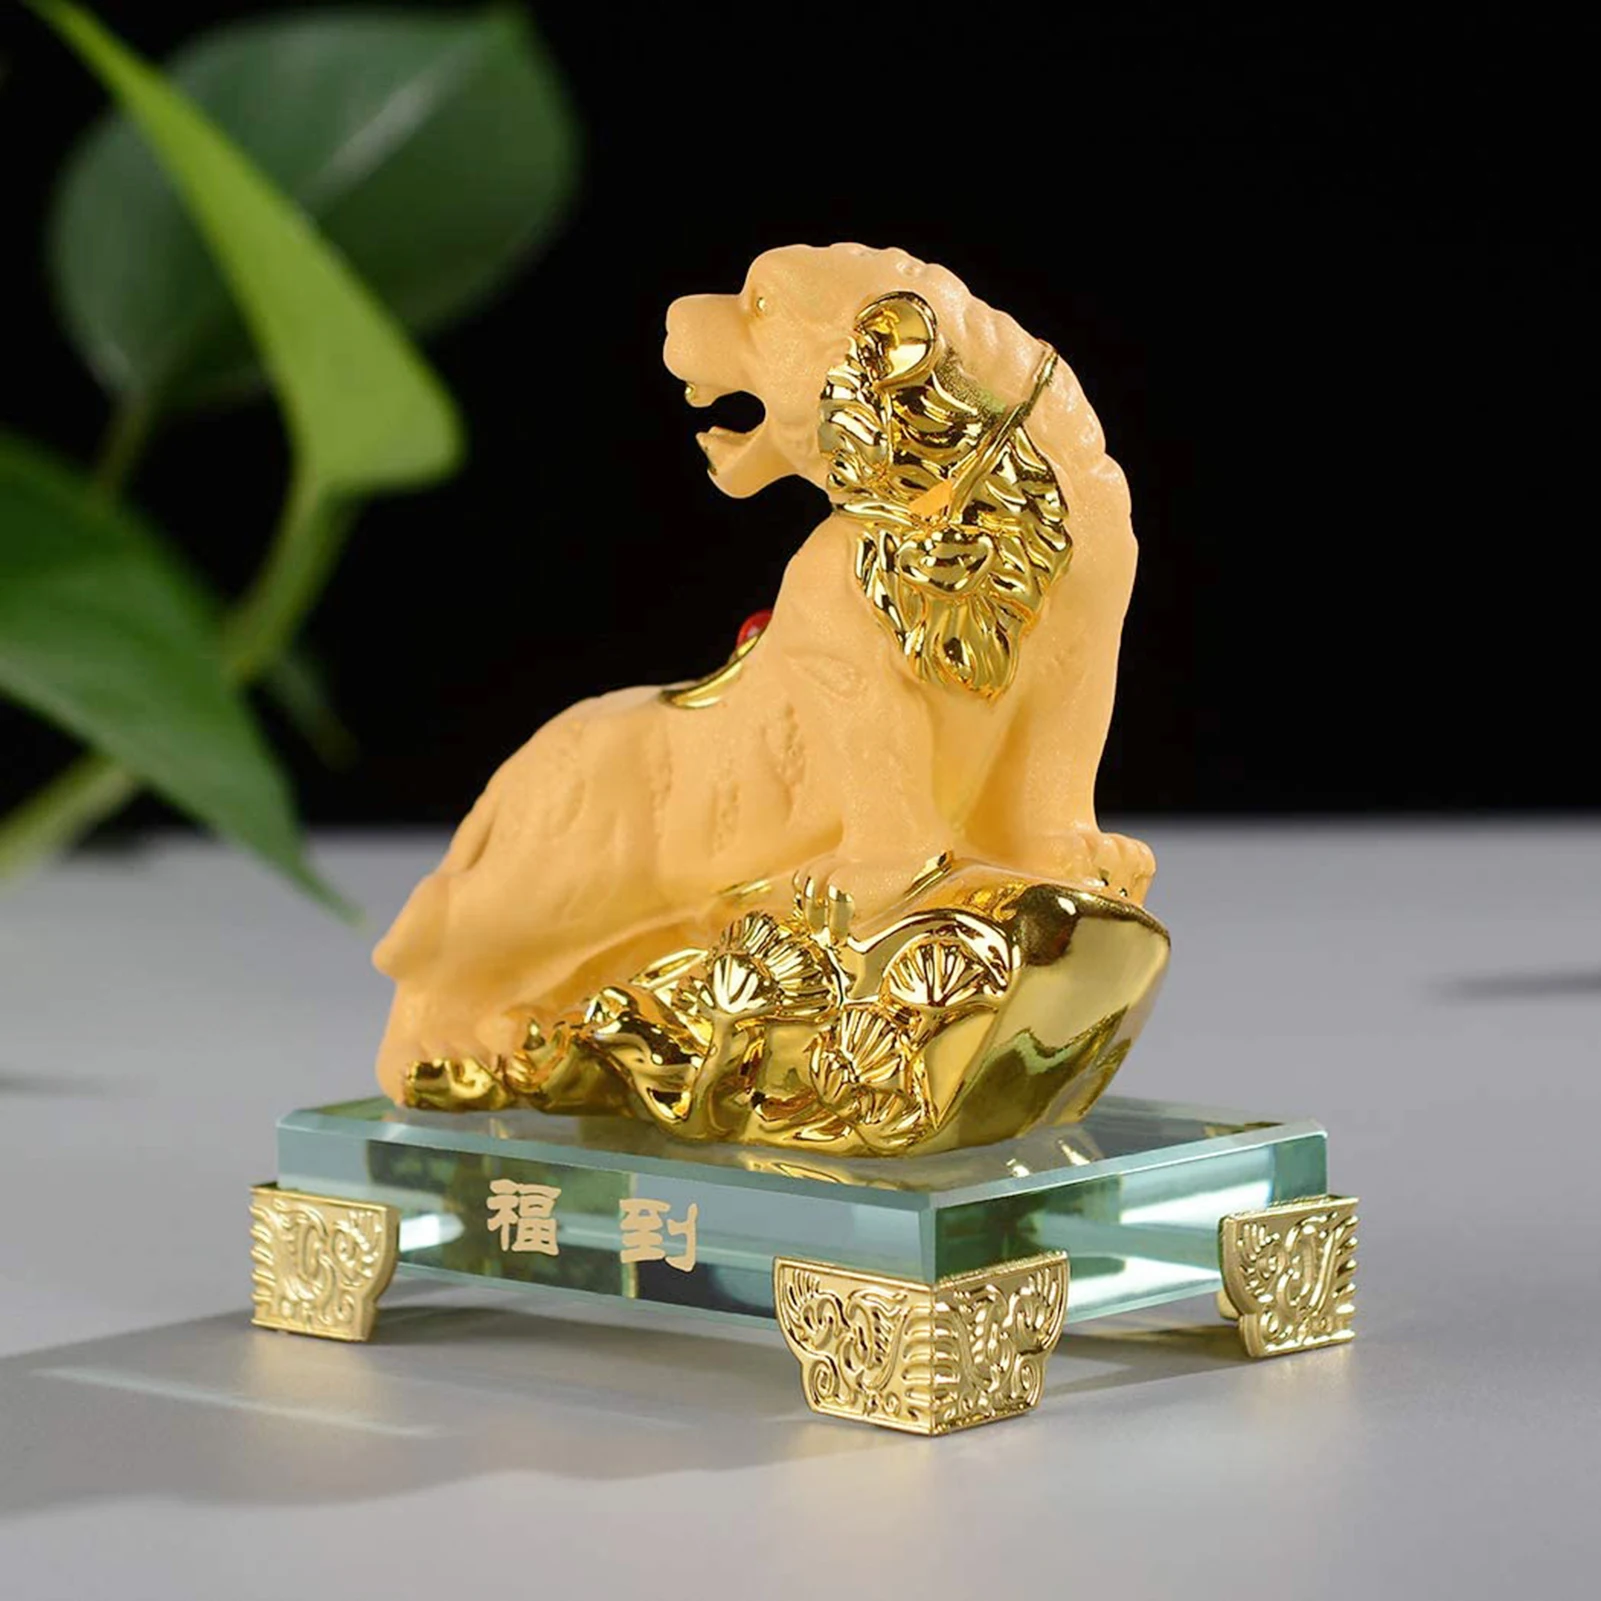 

Tiger 3D Brass Casting Statue Mini Animal Metal Figurine Home Decor Desktop Crafts Sculpture Landscaping Decoration Gifts